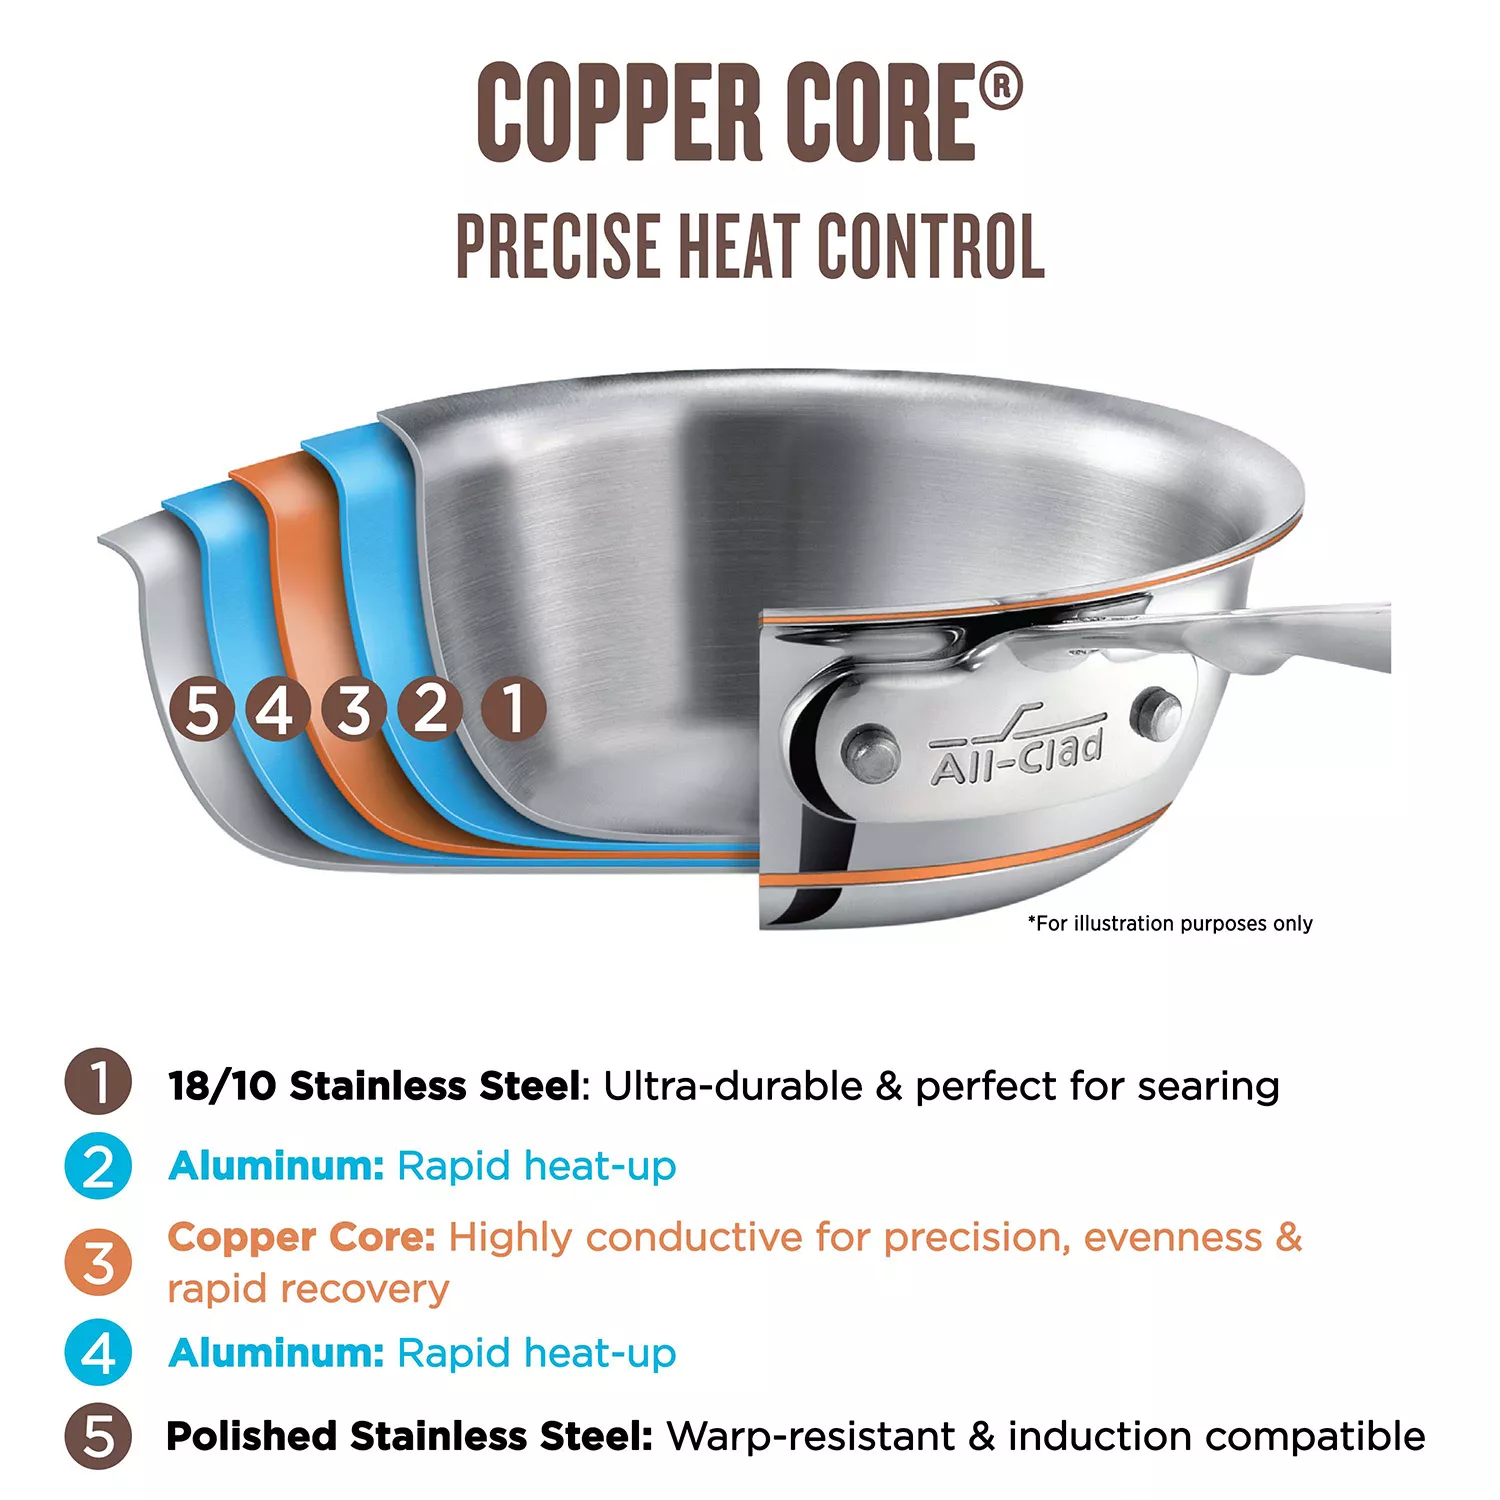 All-Clad Copper Core Stockpot, 8 qt.